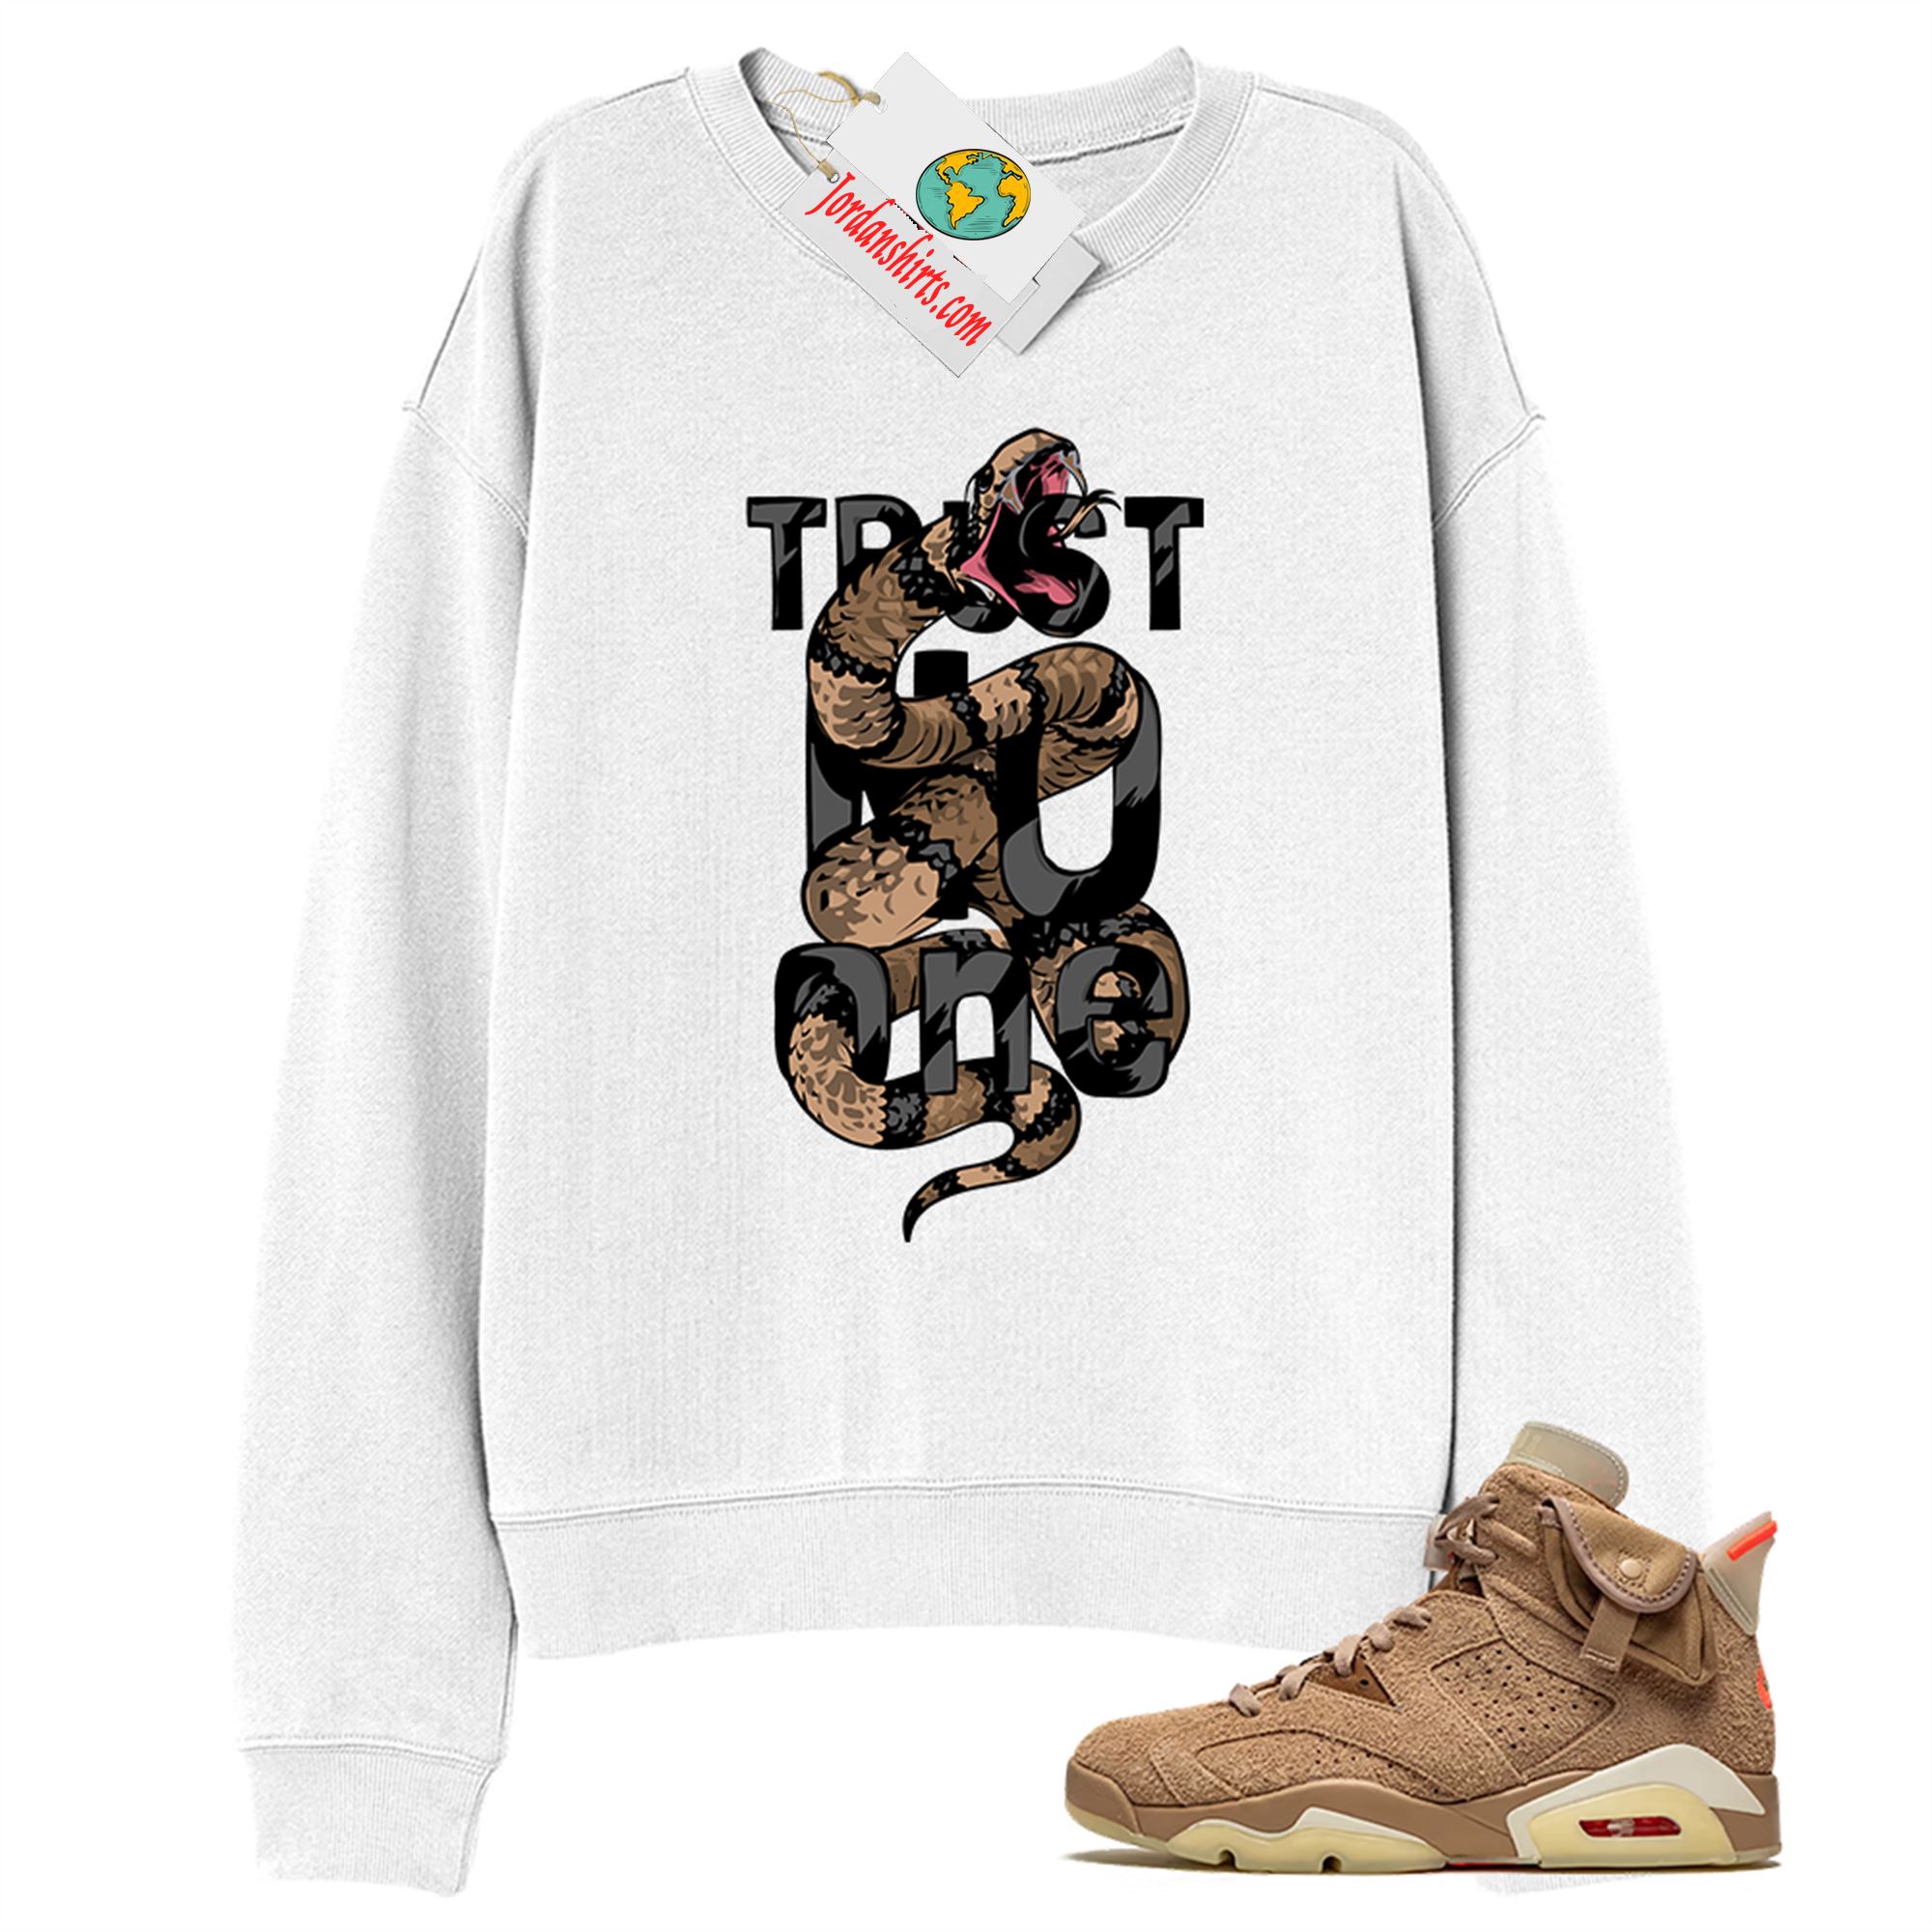 Jordan 6 Sweatshirt, Trust No One King Snake White Sweatshirt Air Jordan 6 Travis Scott 6s Plus Size Up To 5xl